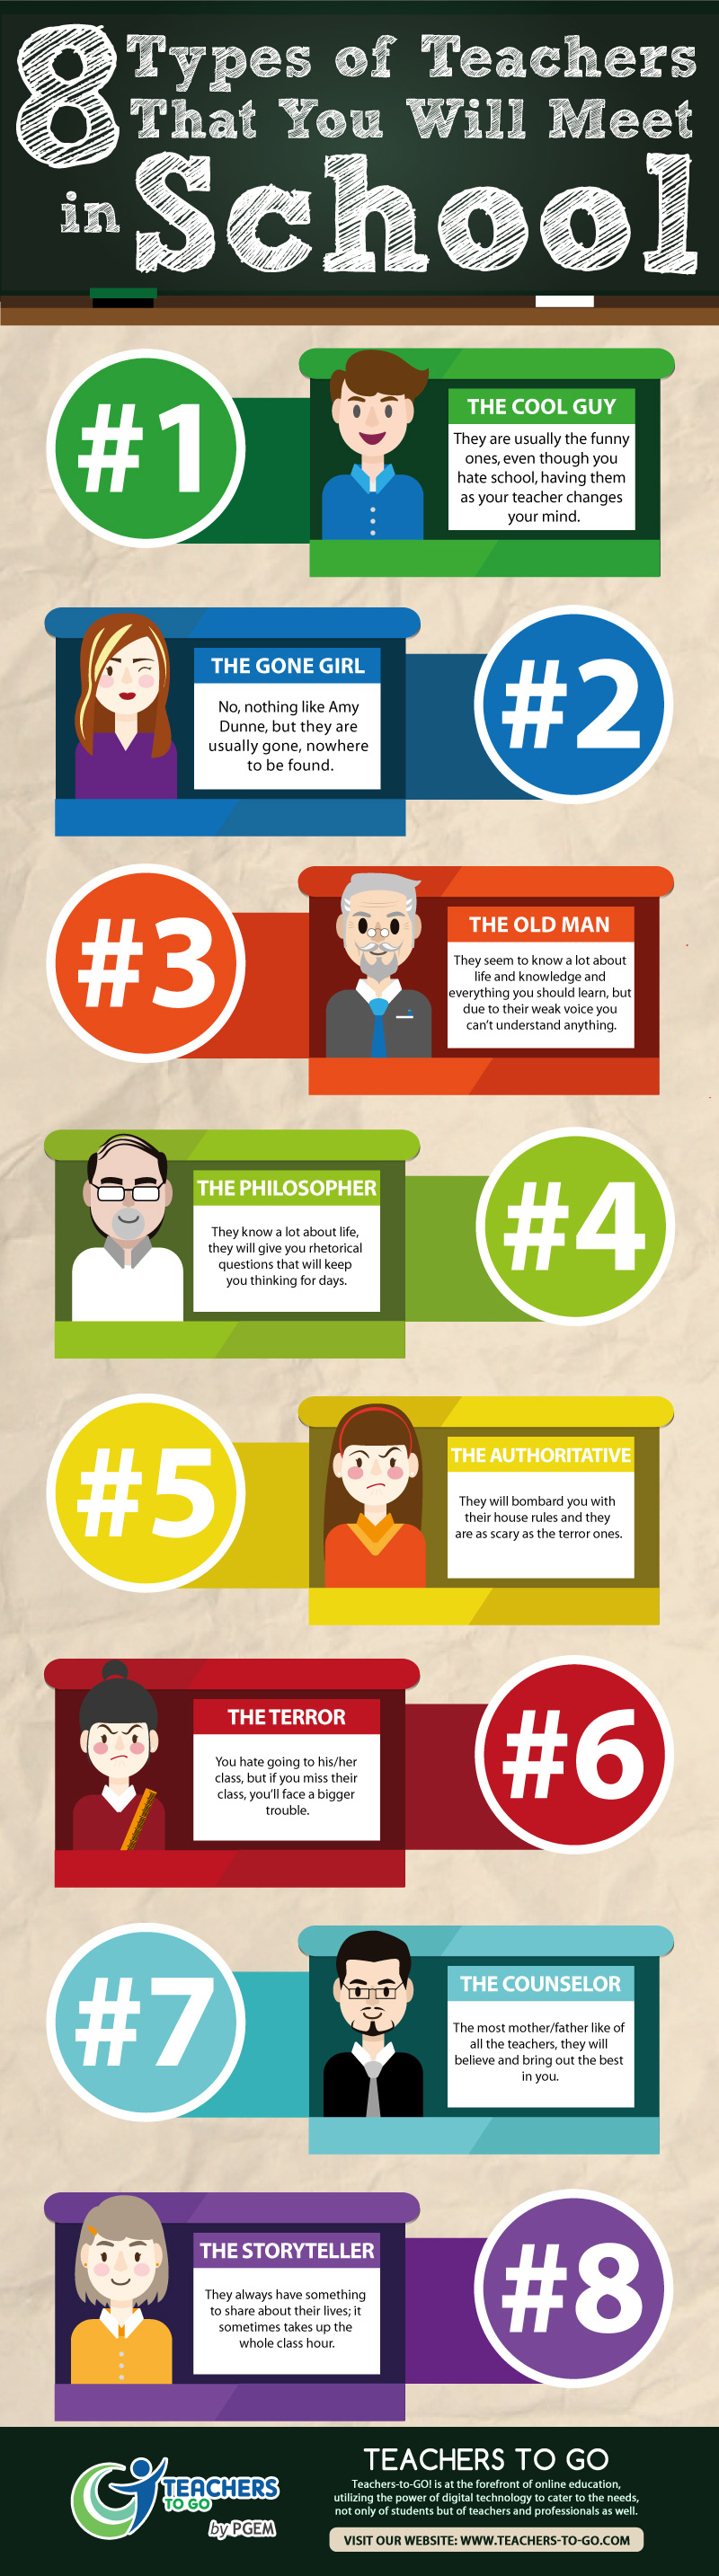 8-types-of-teachers.jpg